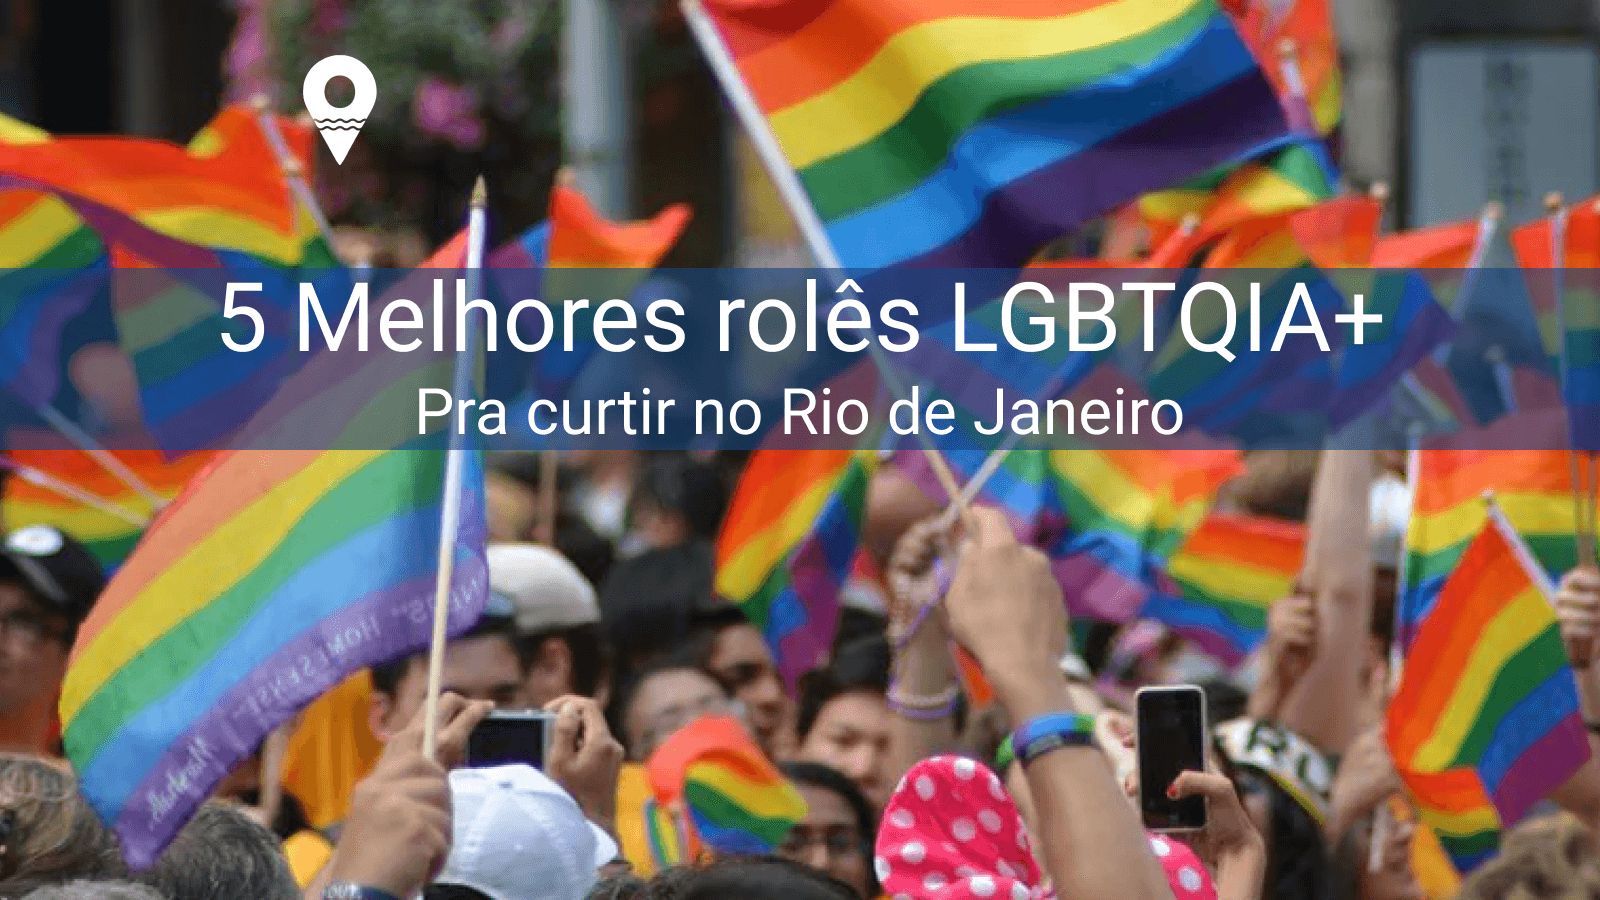 5 best LGBTQIA+ hotspots in Rio de Janeiro